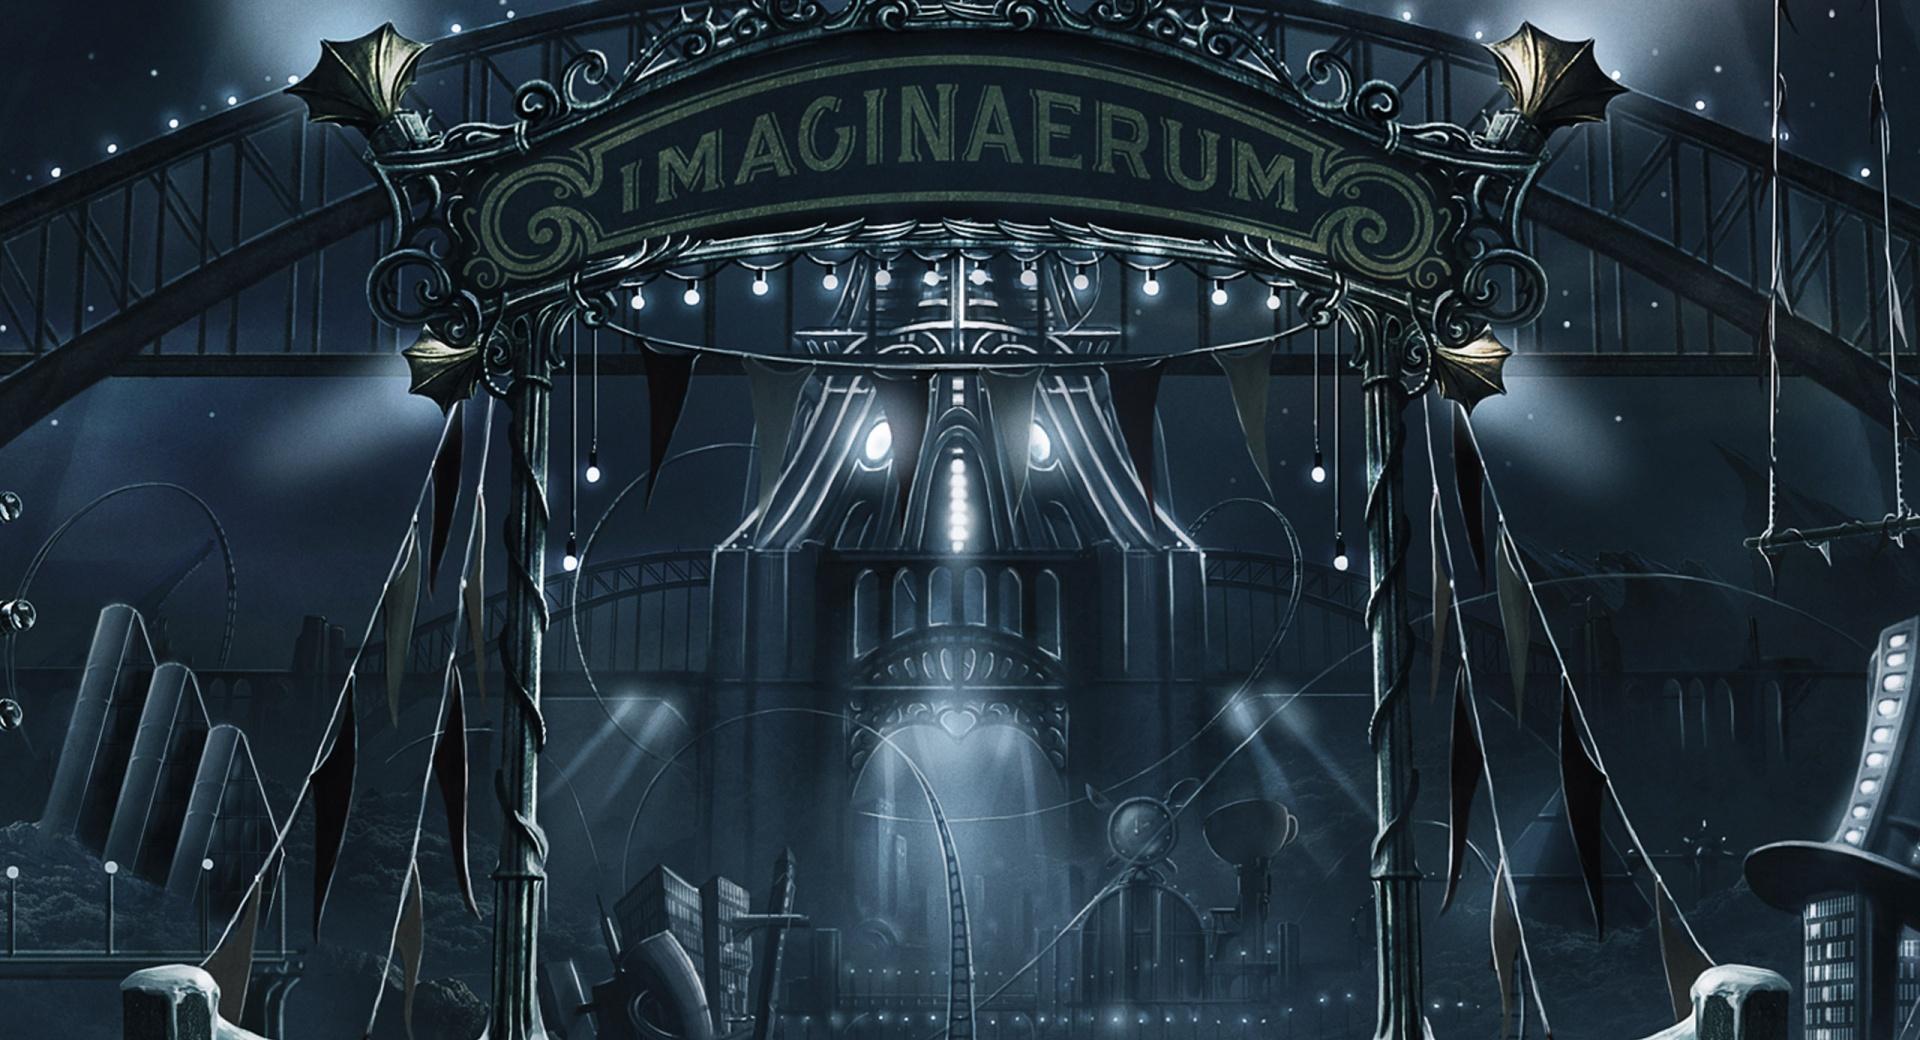 Imaginaerum - Nightwish at 1152 x 864 size wallpapers HD quality